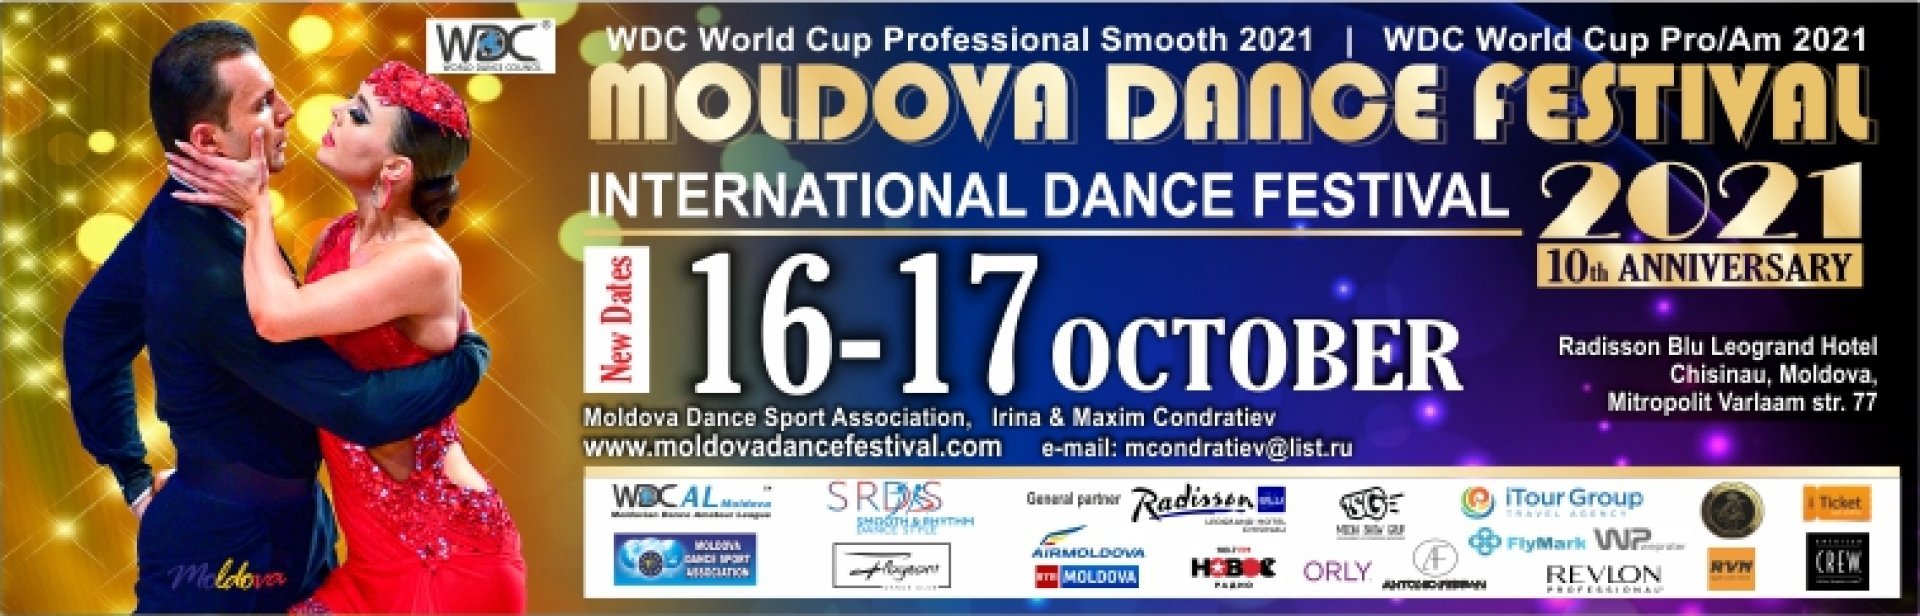 17 Octombrie 08:30-10:00 - Moldova Dance Festival 2021